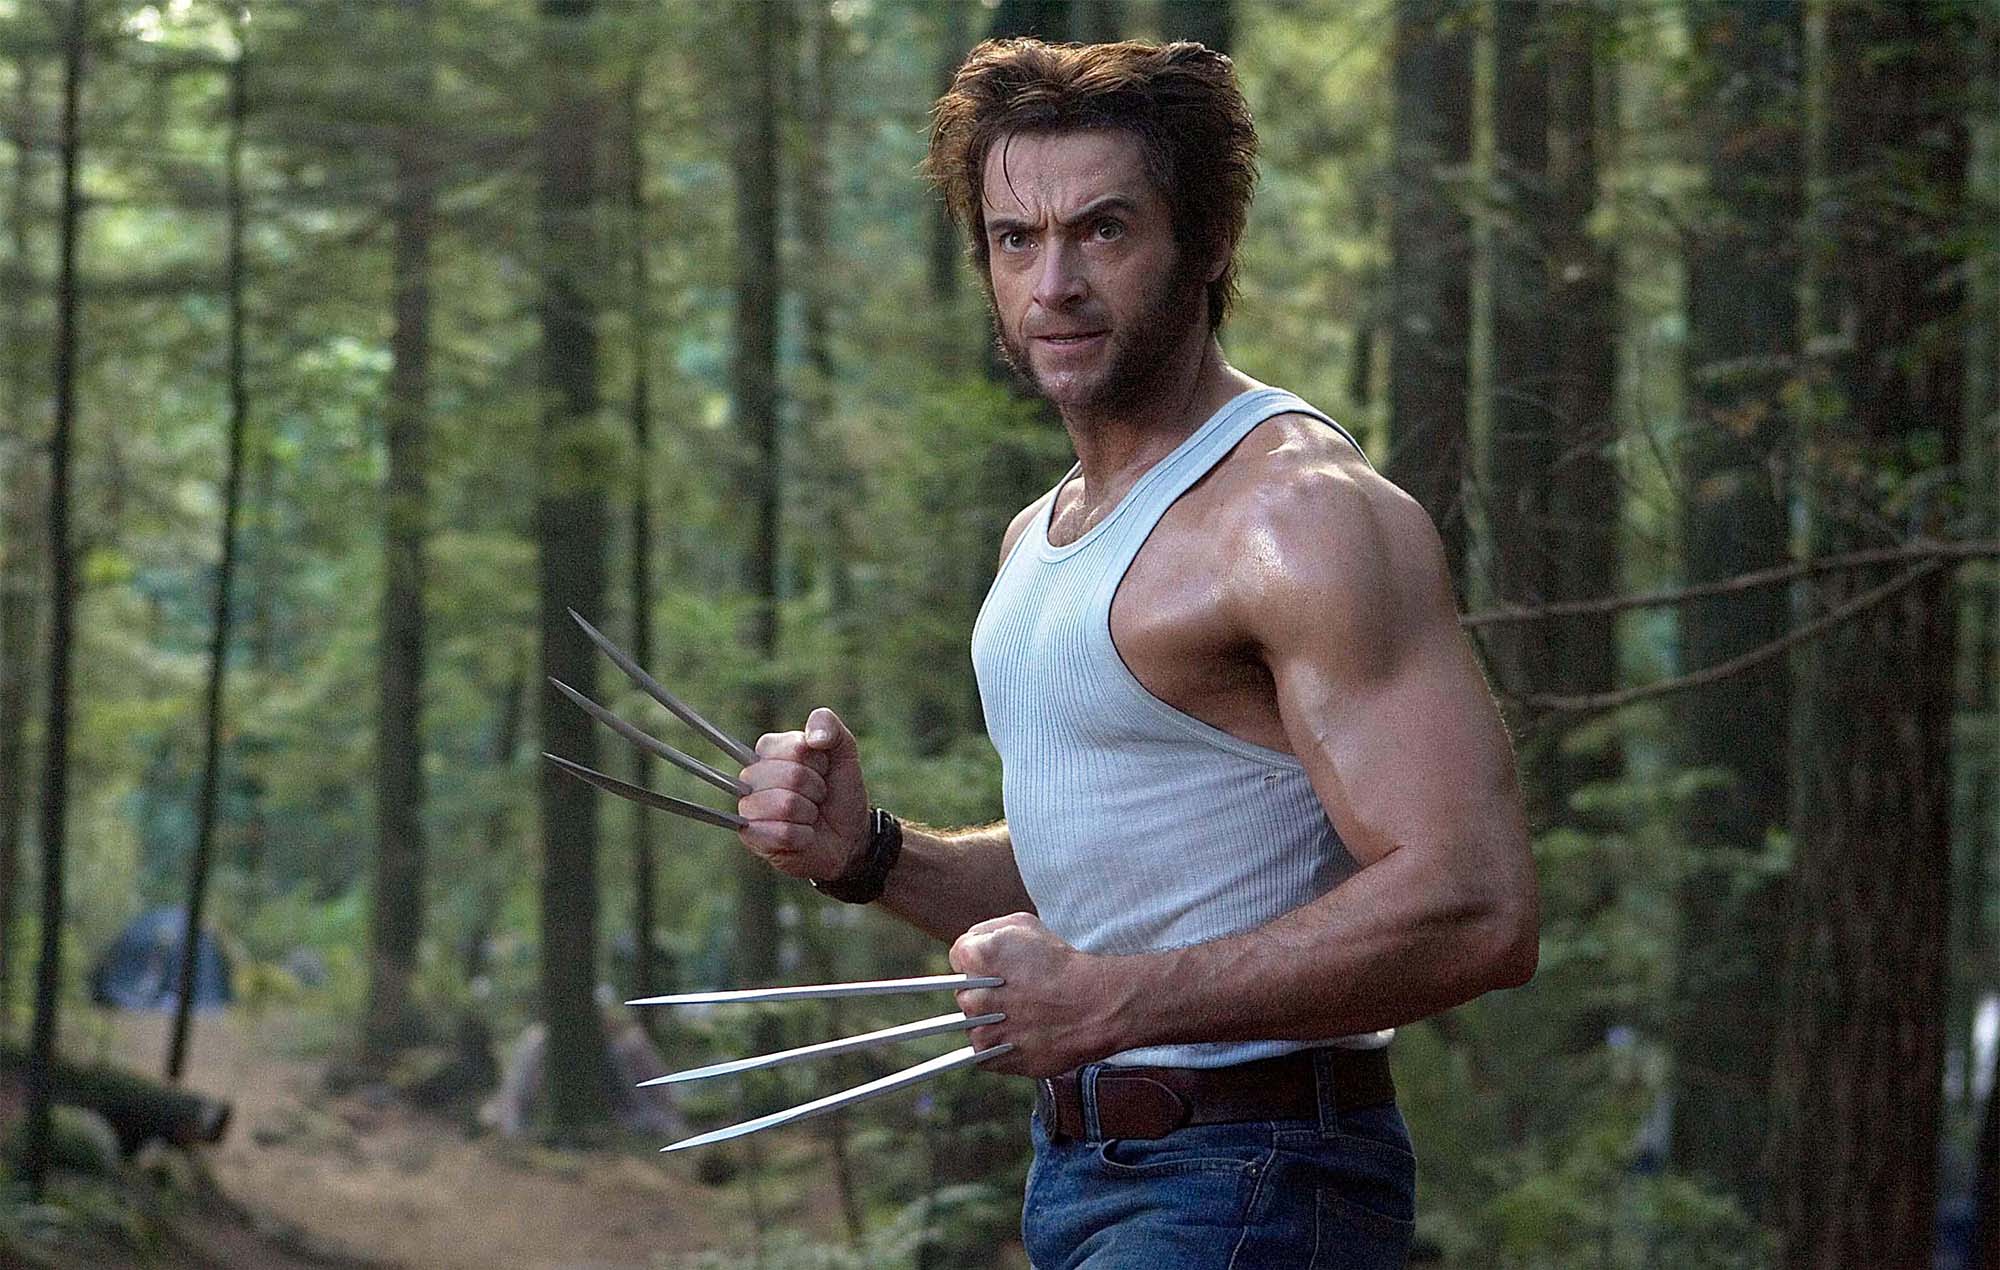 Hugh Jackman as Logan/Wolverine in the X-Men franchise